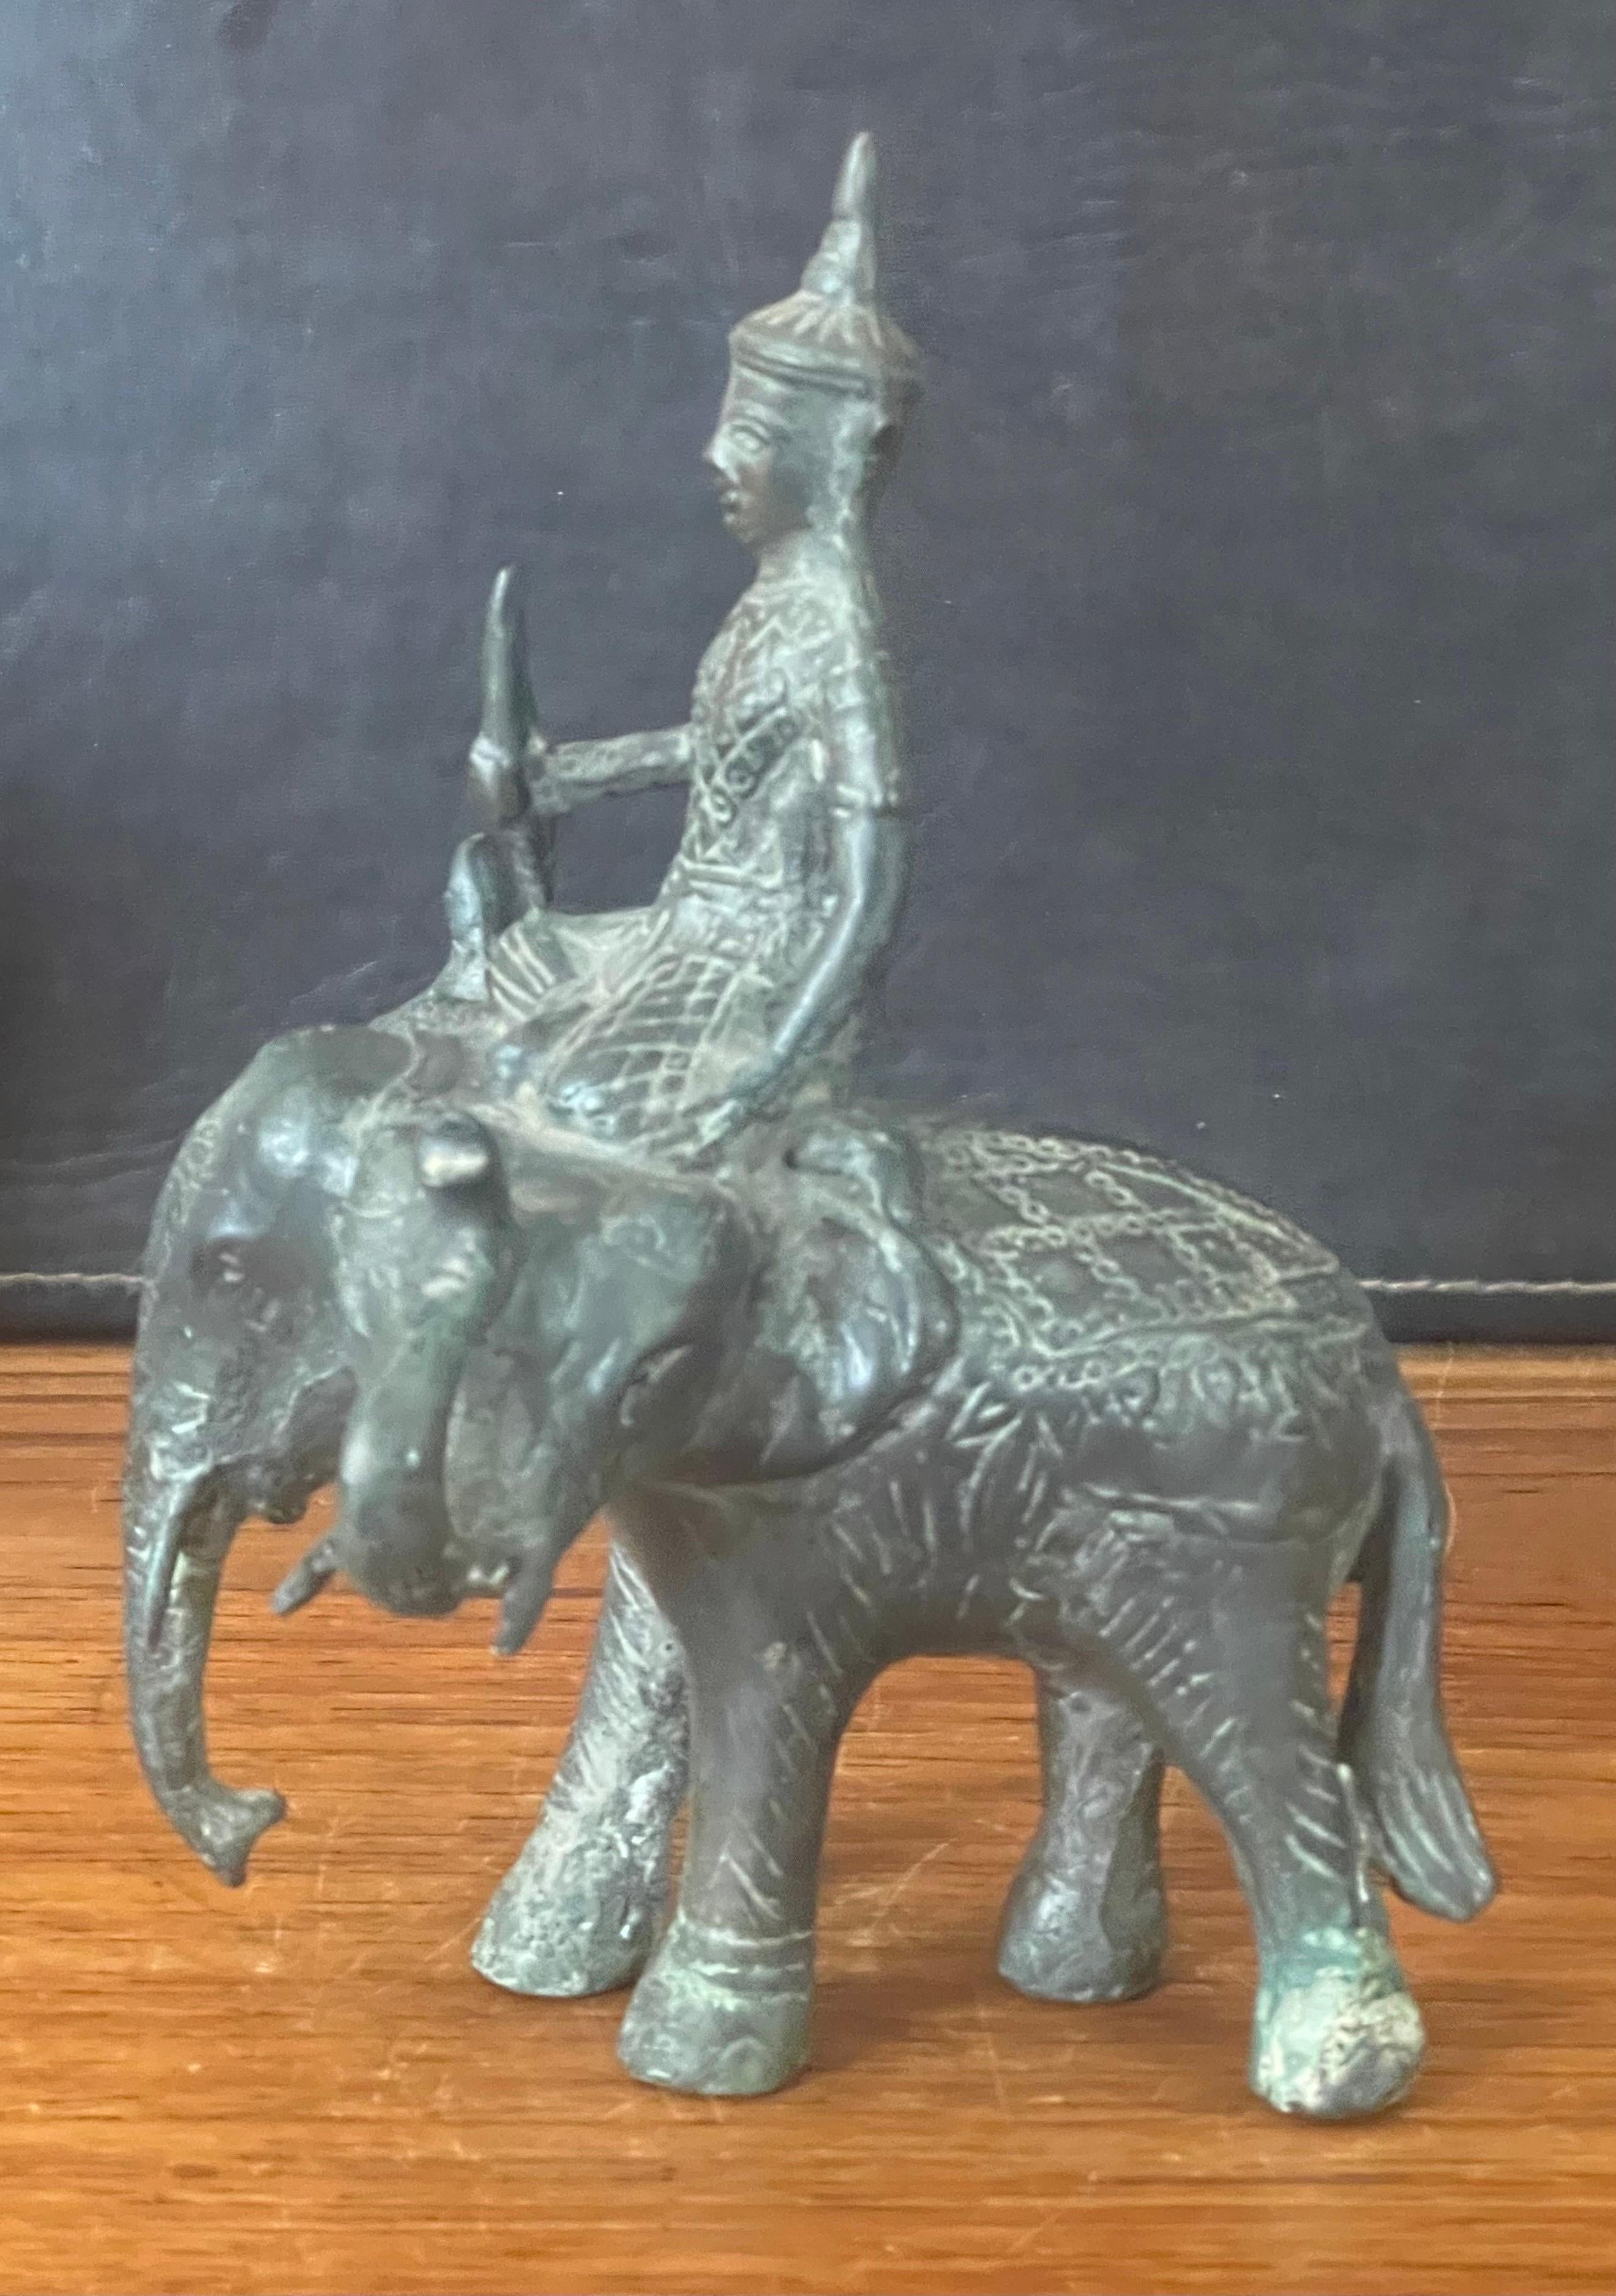 3 headed elephant meaning